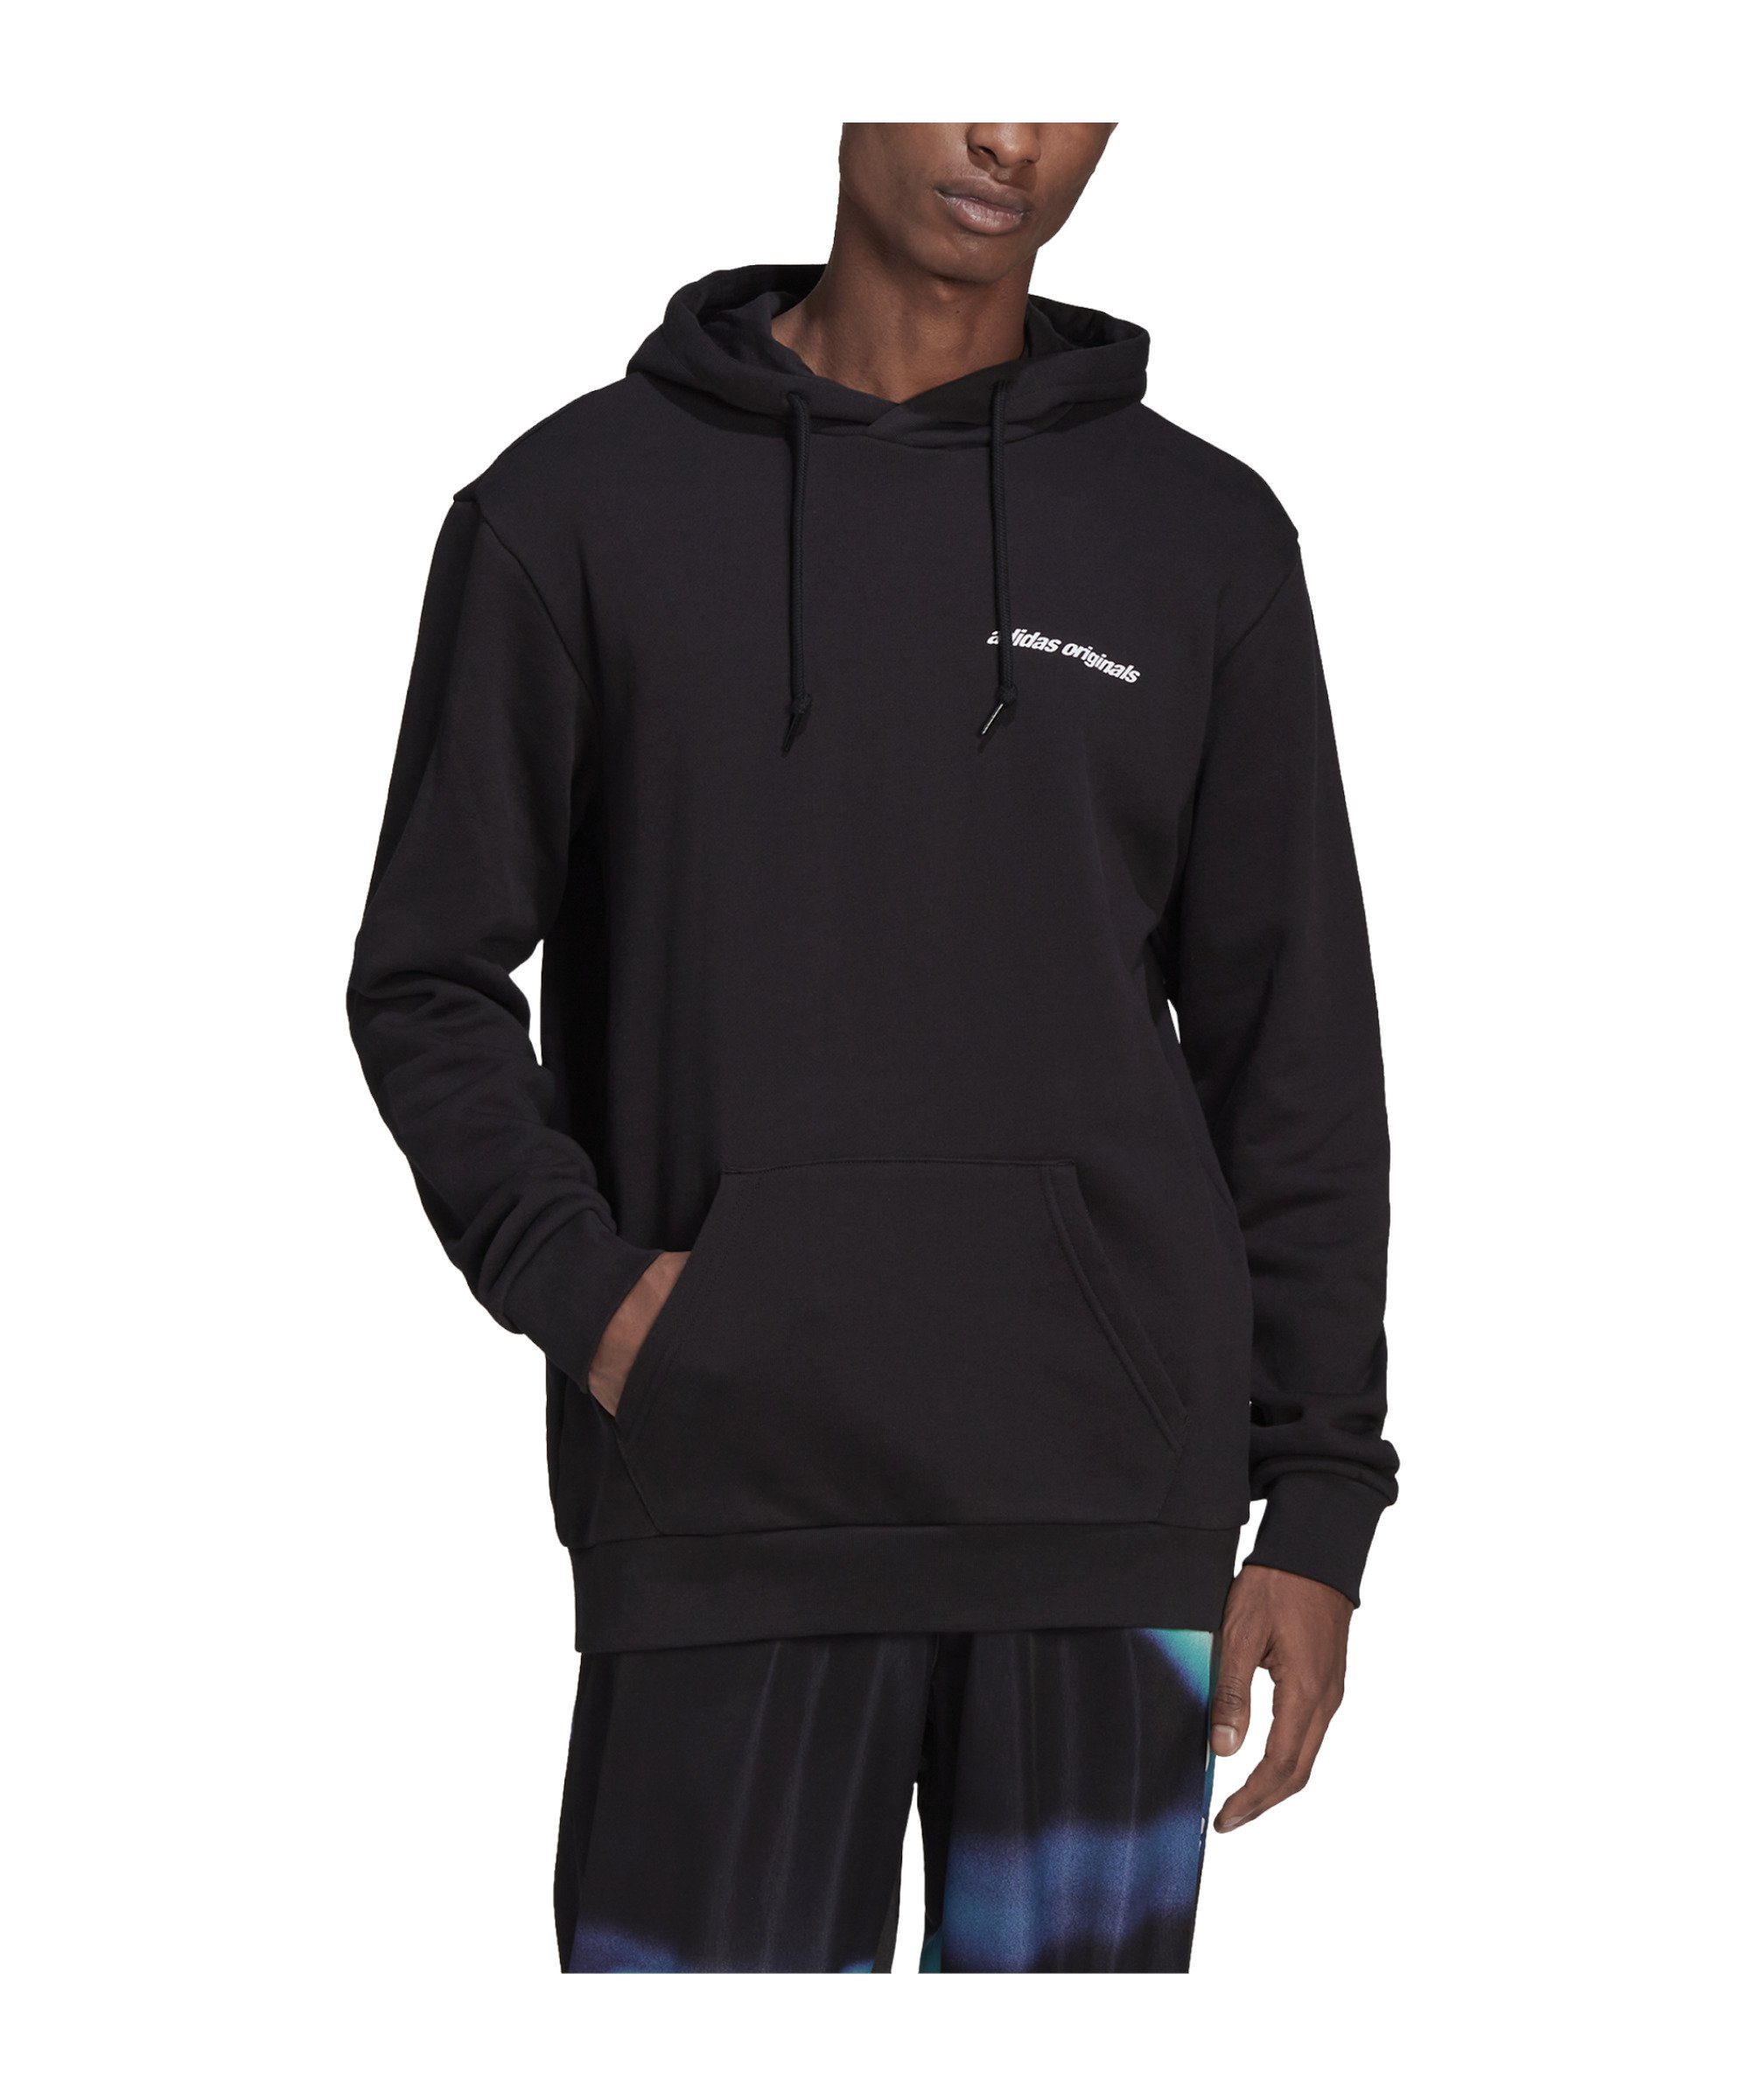 Z Hoody Originals Yung Sweatshirt adidas